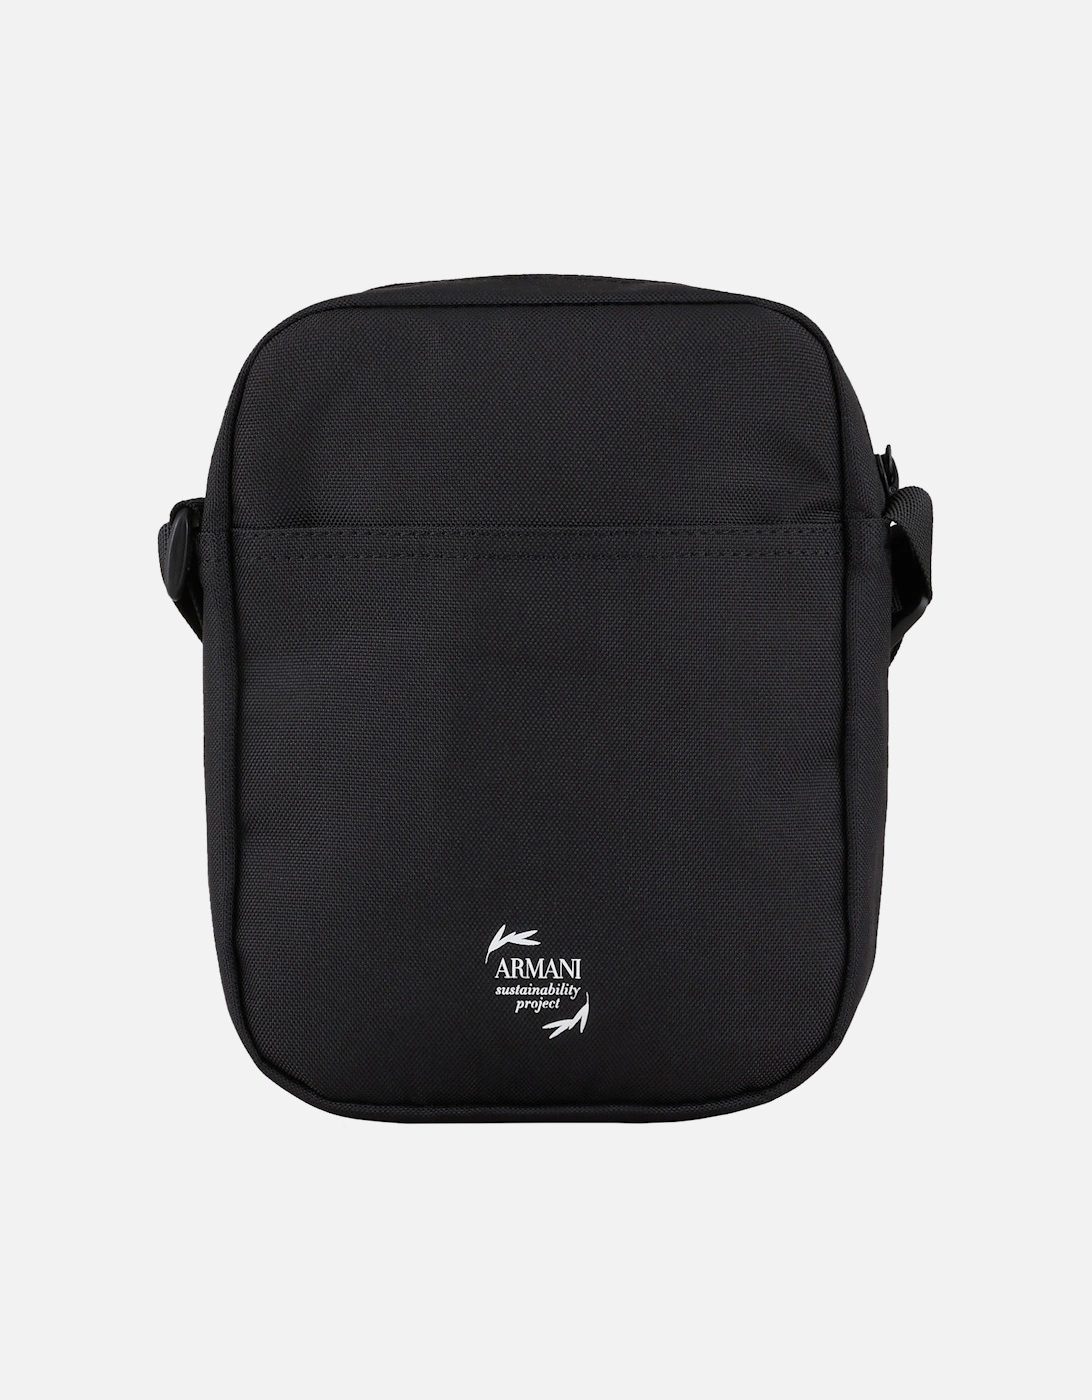 Mens Small Pouch Shoulder Bag (Black/White)